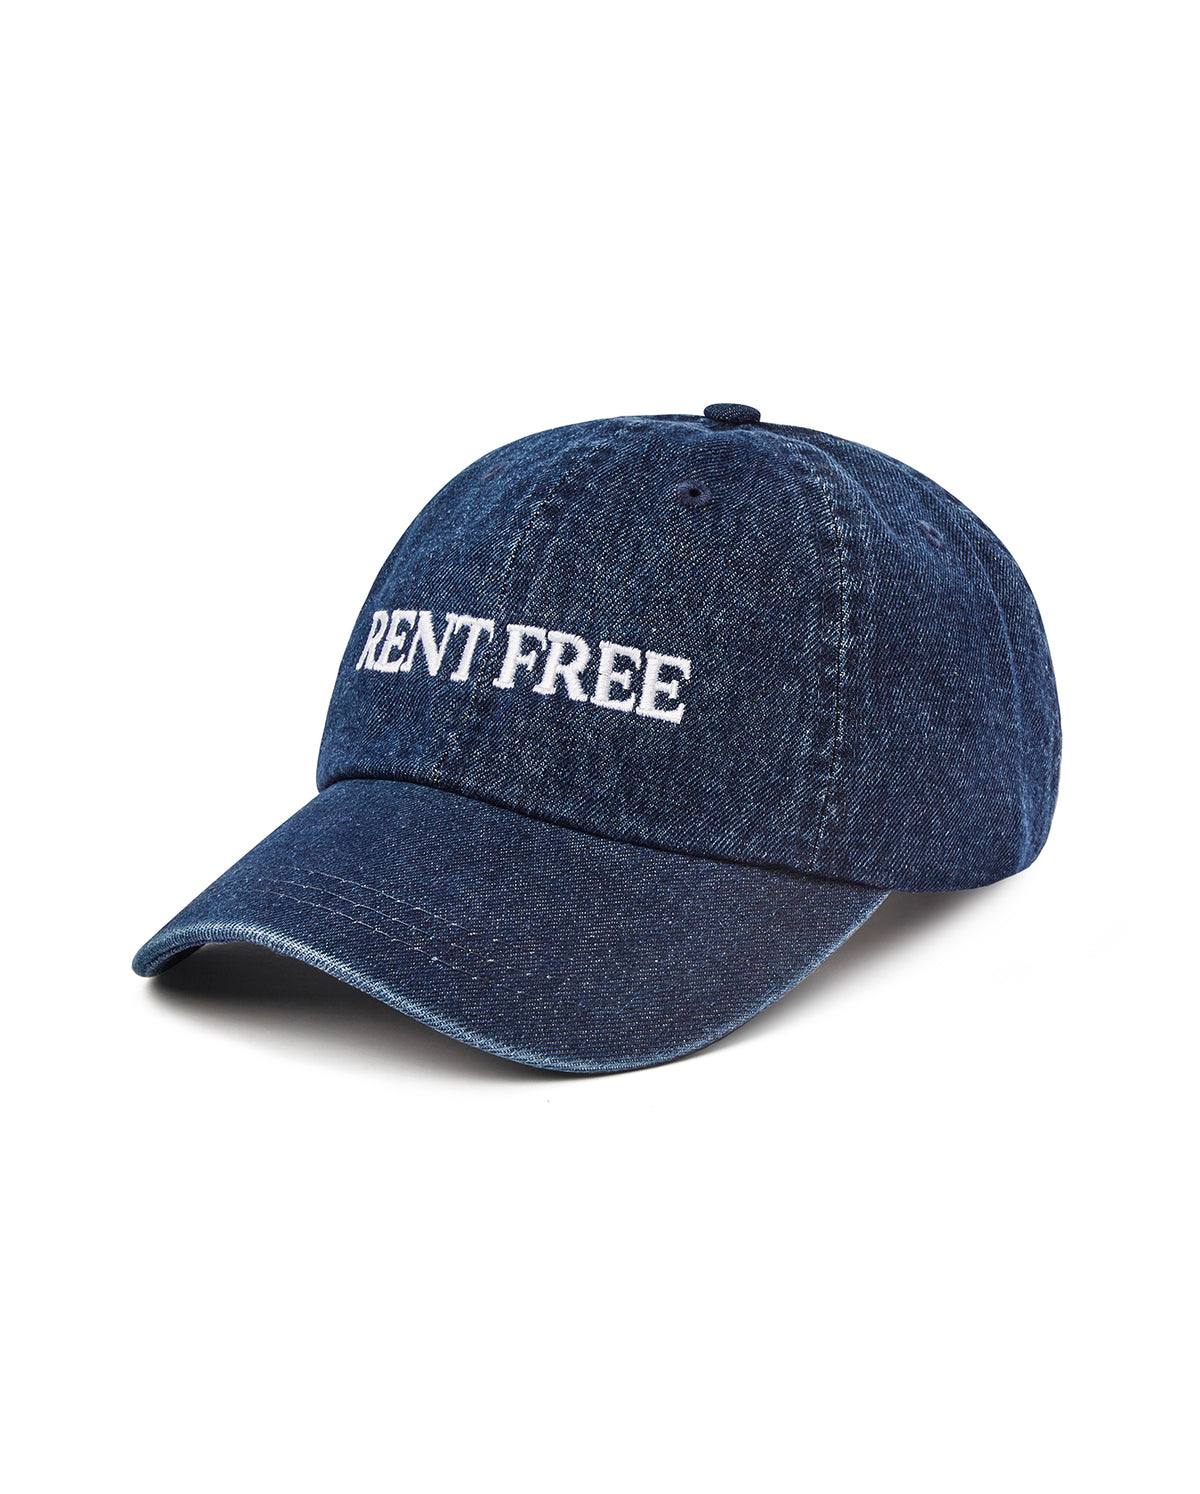 Rent Free Hat